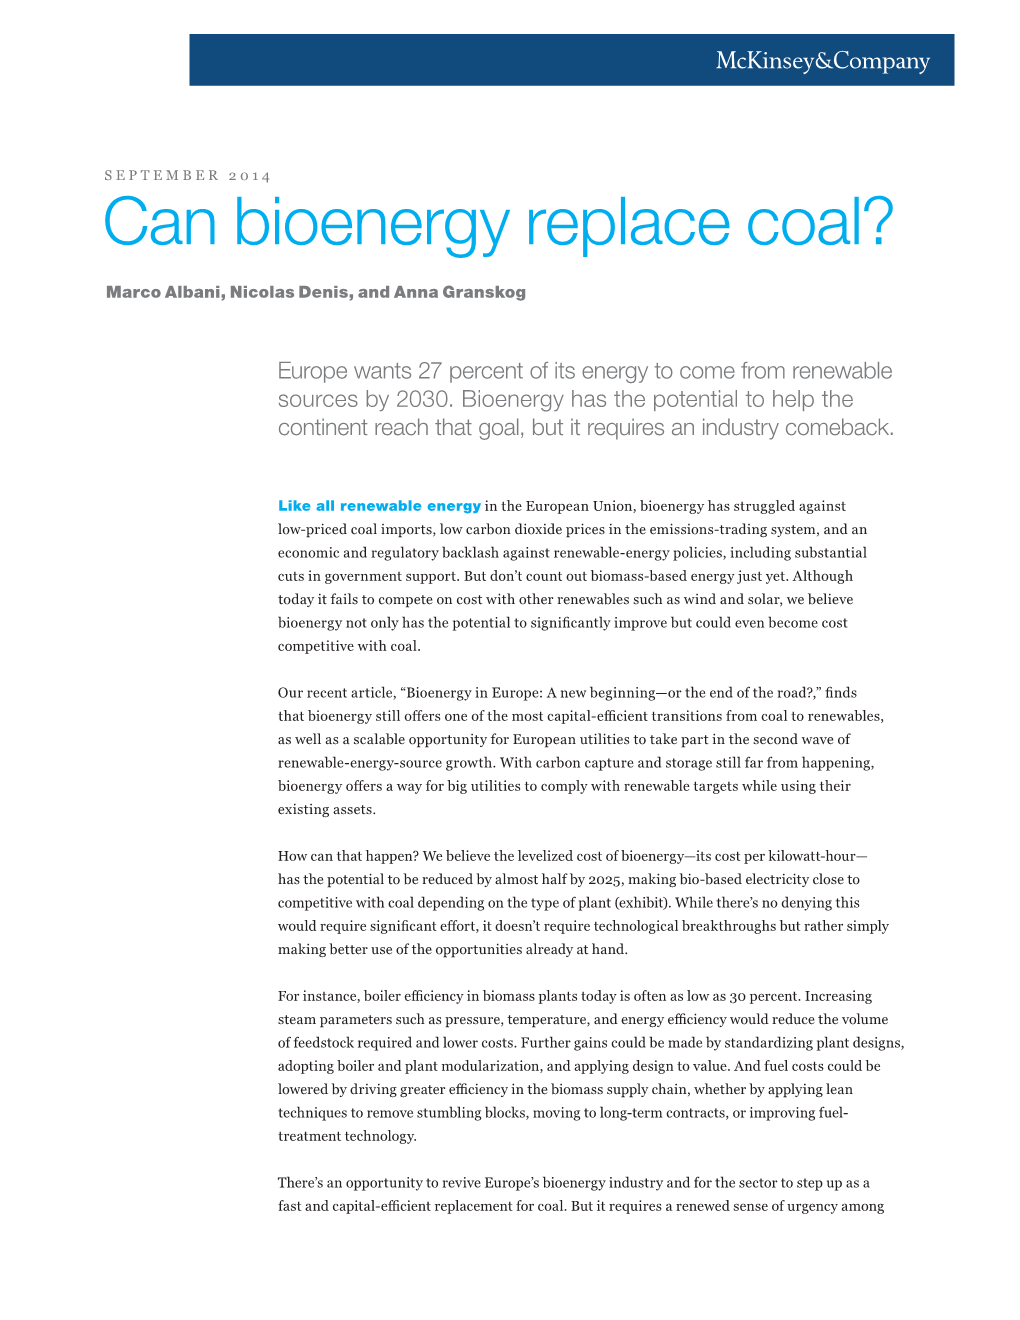 Can Bioenergy Replace Coal?